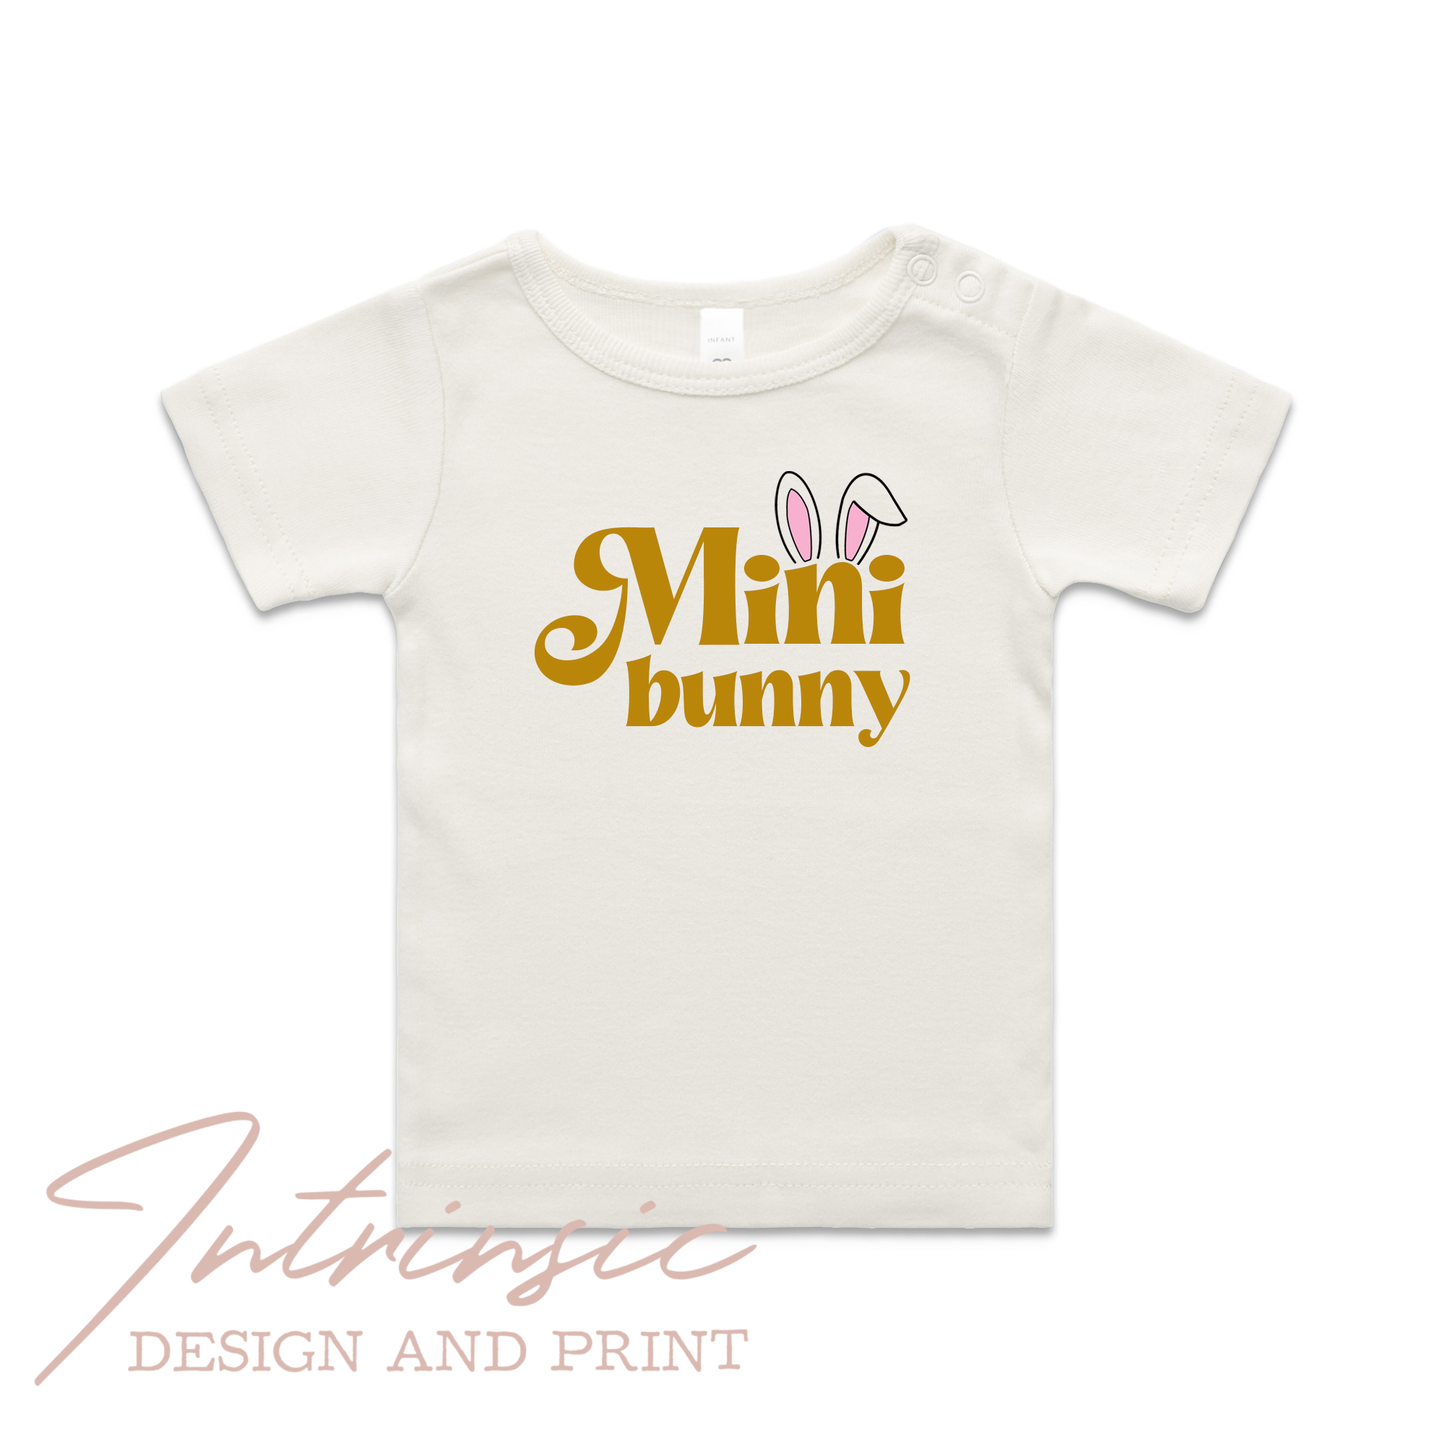 Retro Mini bunny - infant